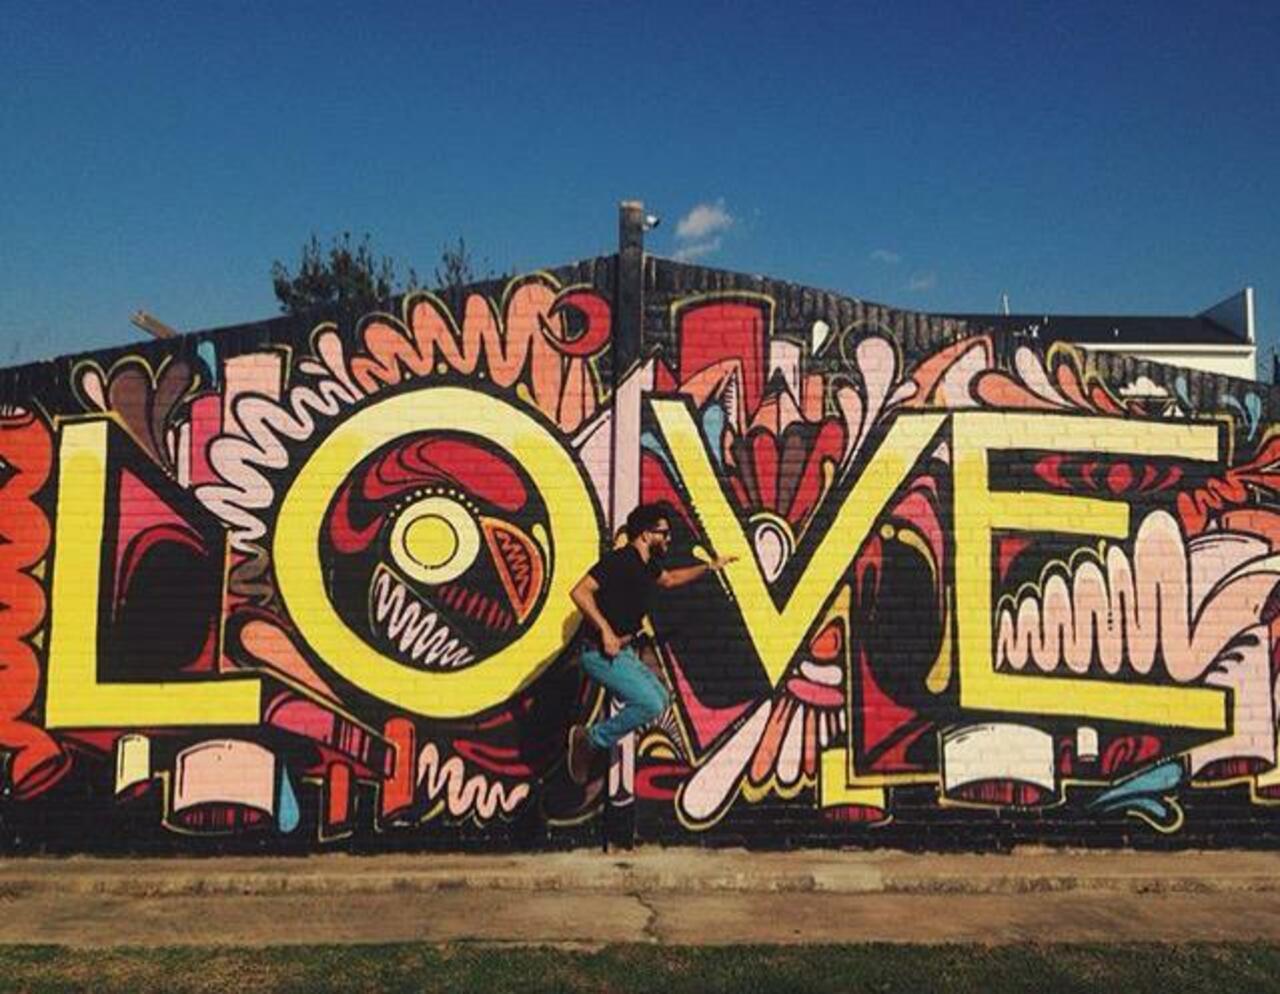 RT belilac "RT belilac "Love ❤️
Street Art by WileyArt

#art #graffiti #mural #streetart http://t.co/1qFfKLruyG""